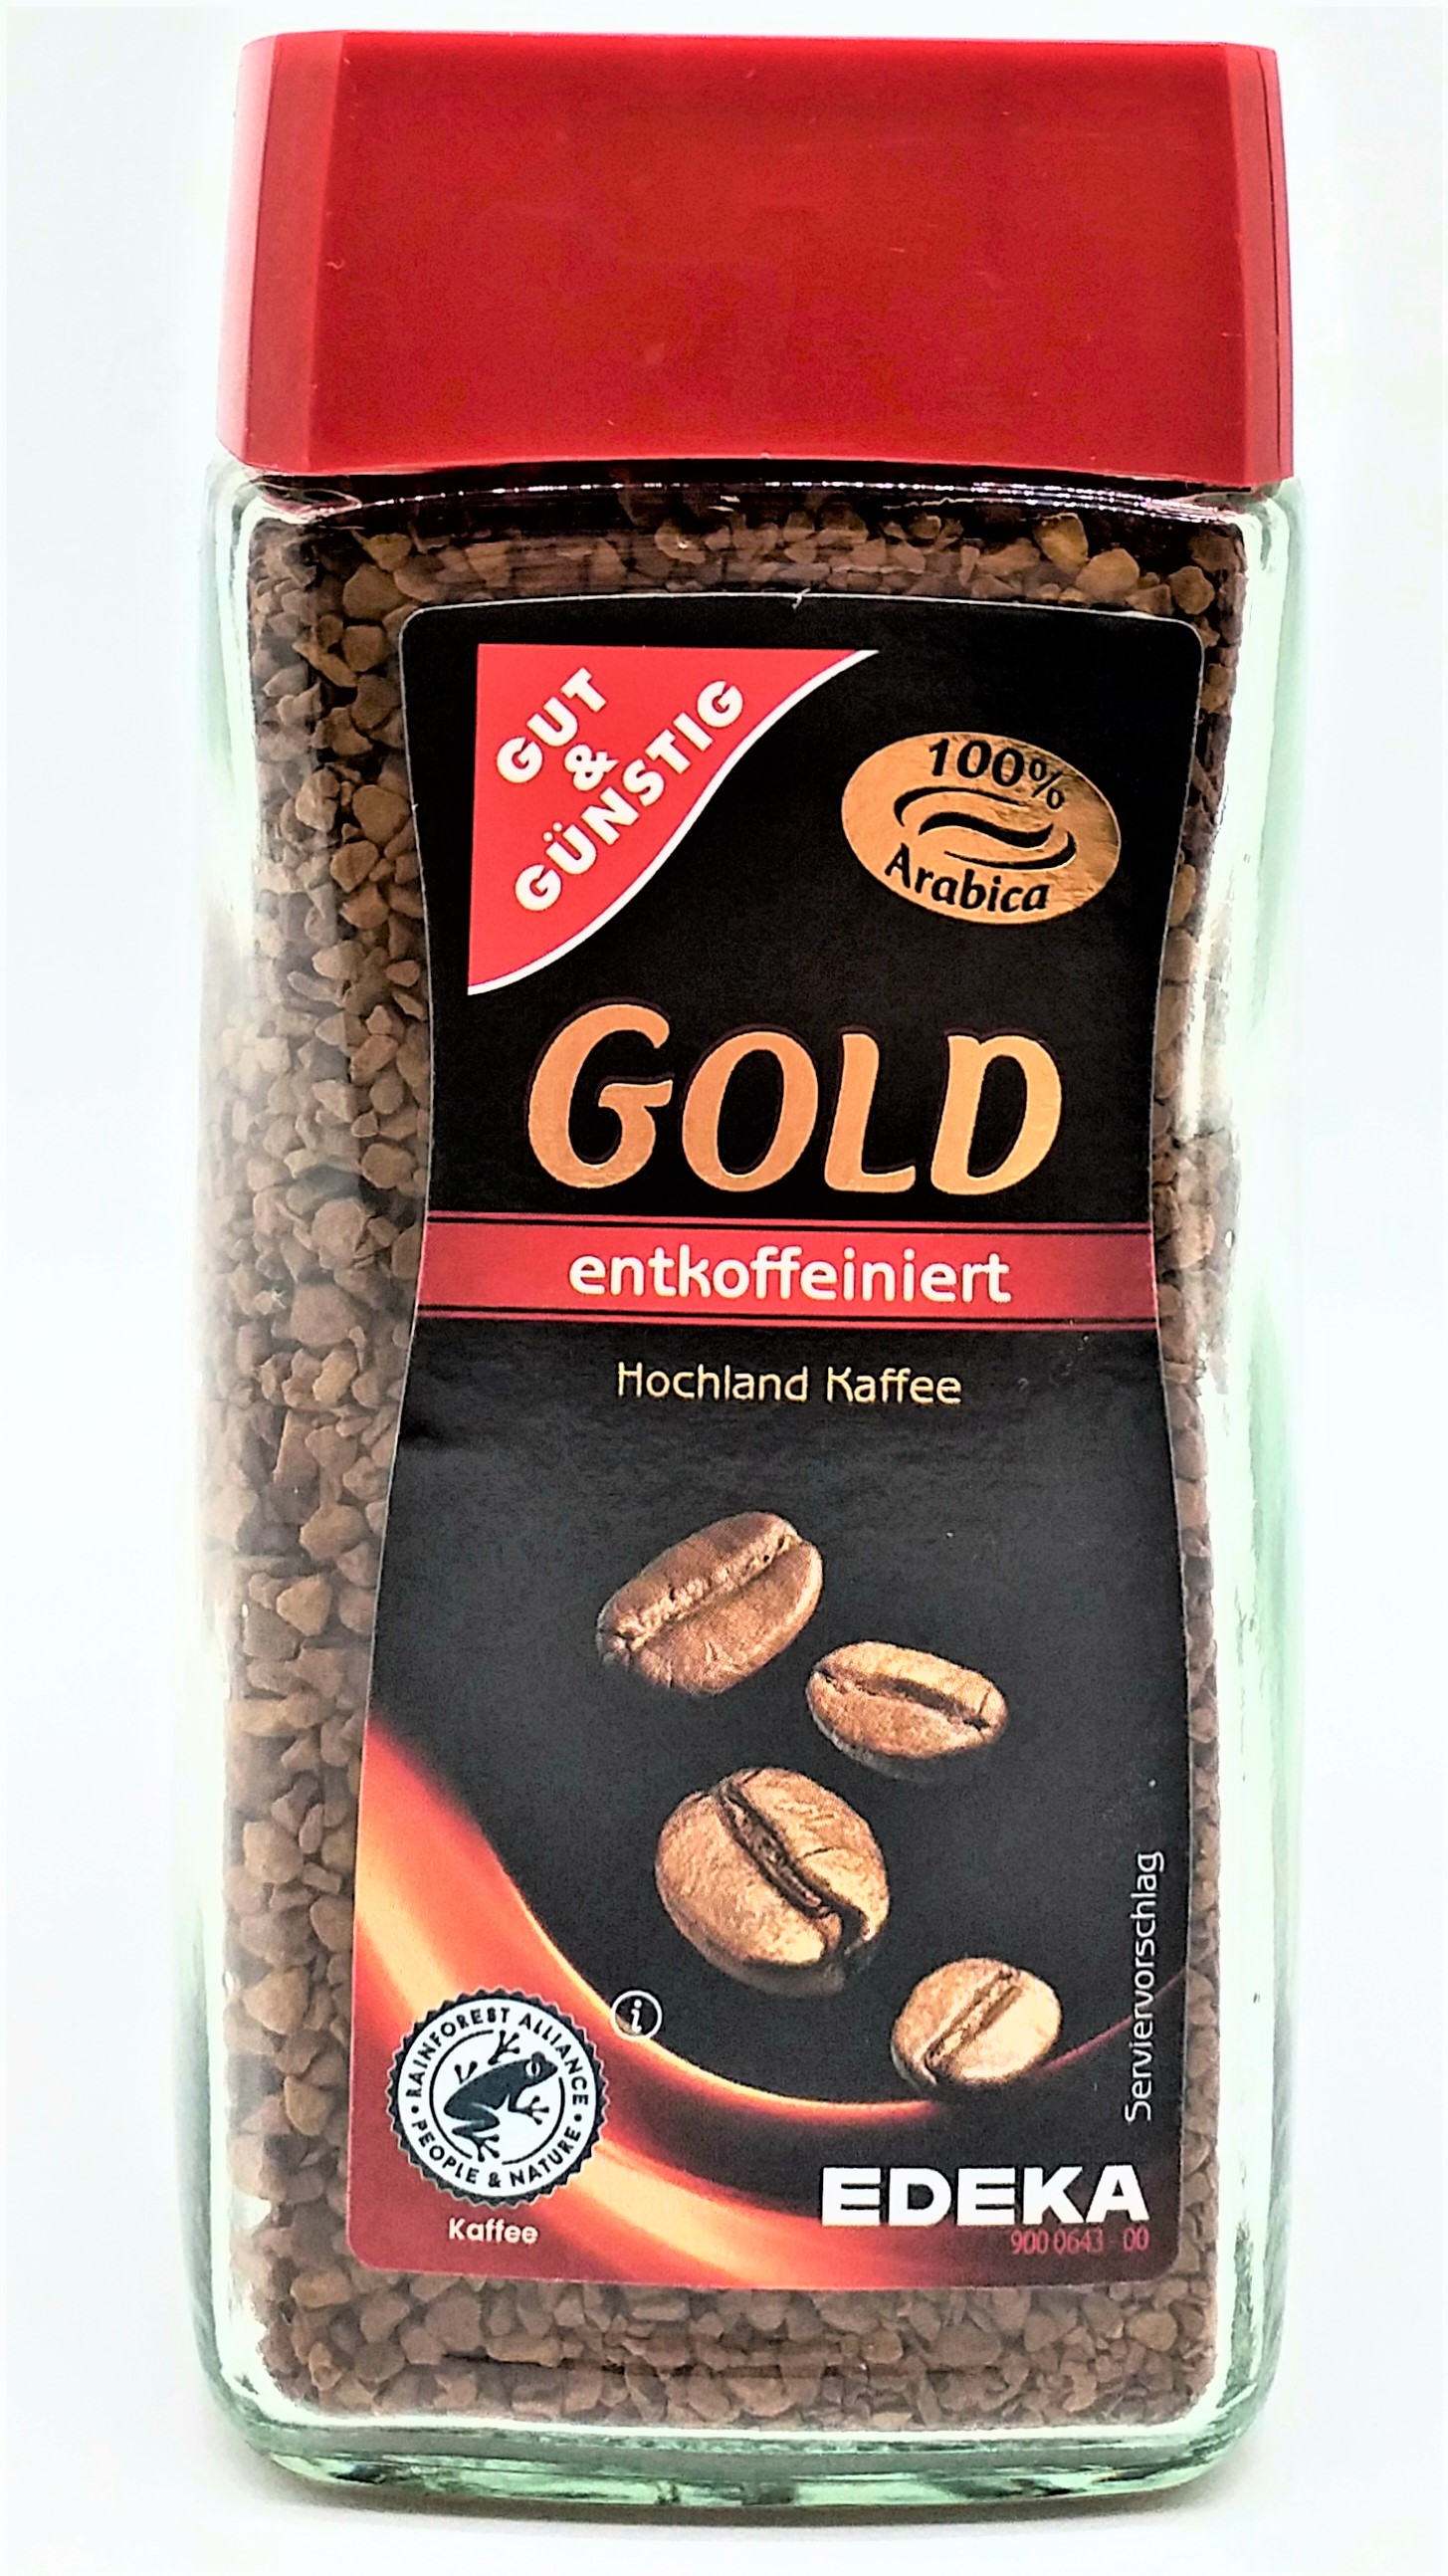 G&G Gold löslicher Kaffee entkoffeiniert 100g